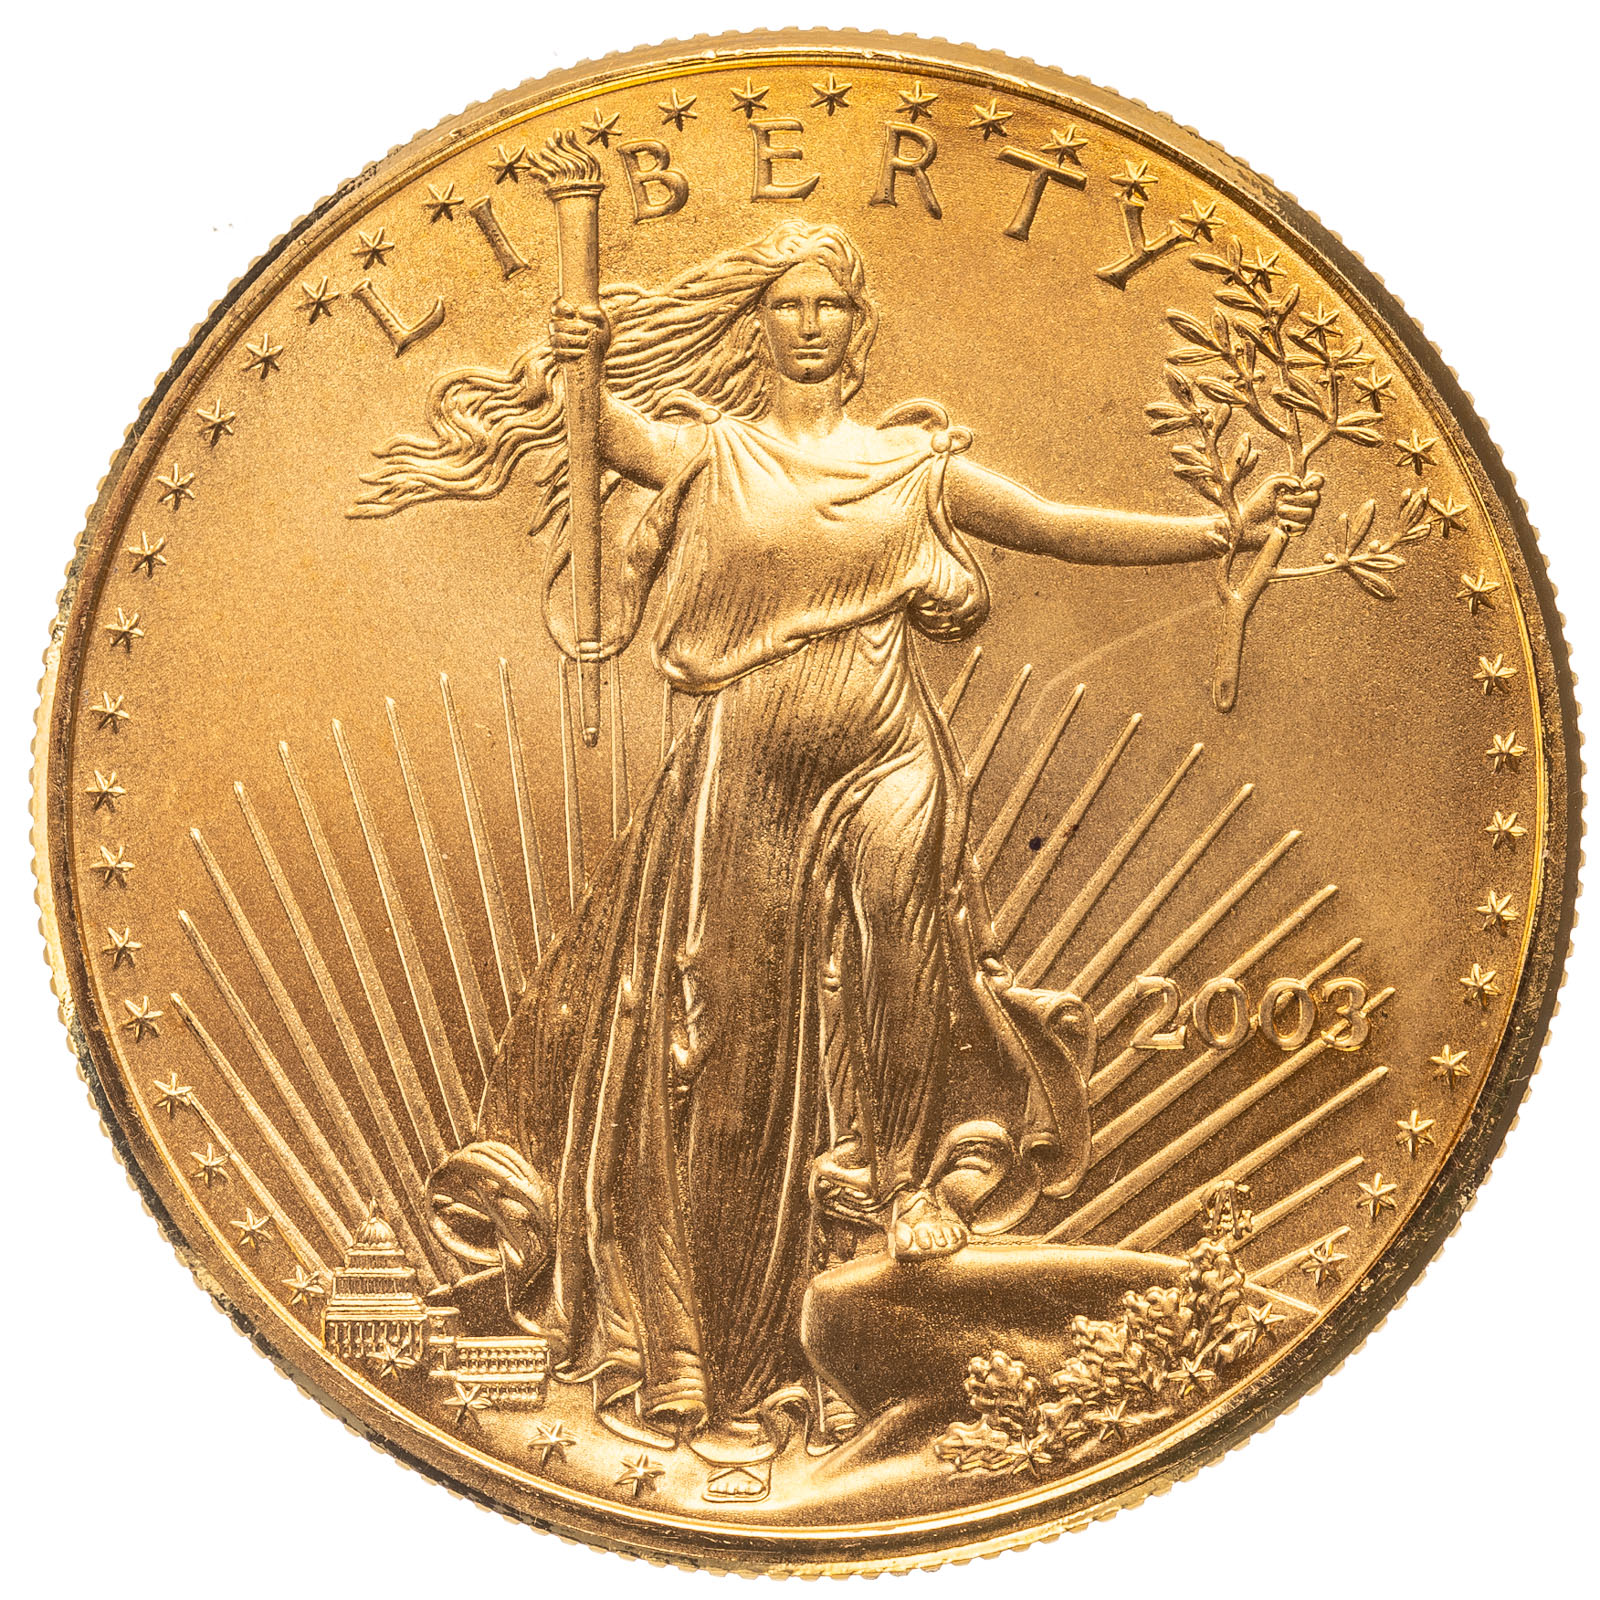 2003 $50 1 OZ GOLD AMERICAN EAGLE